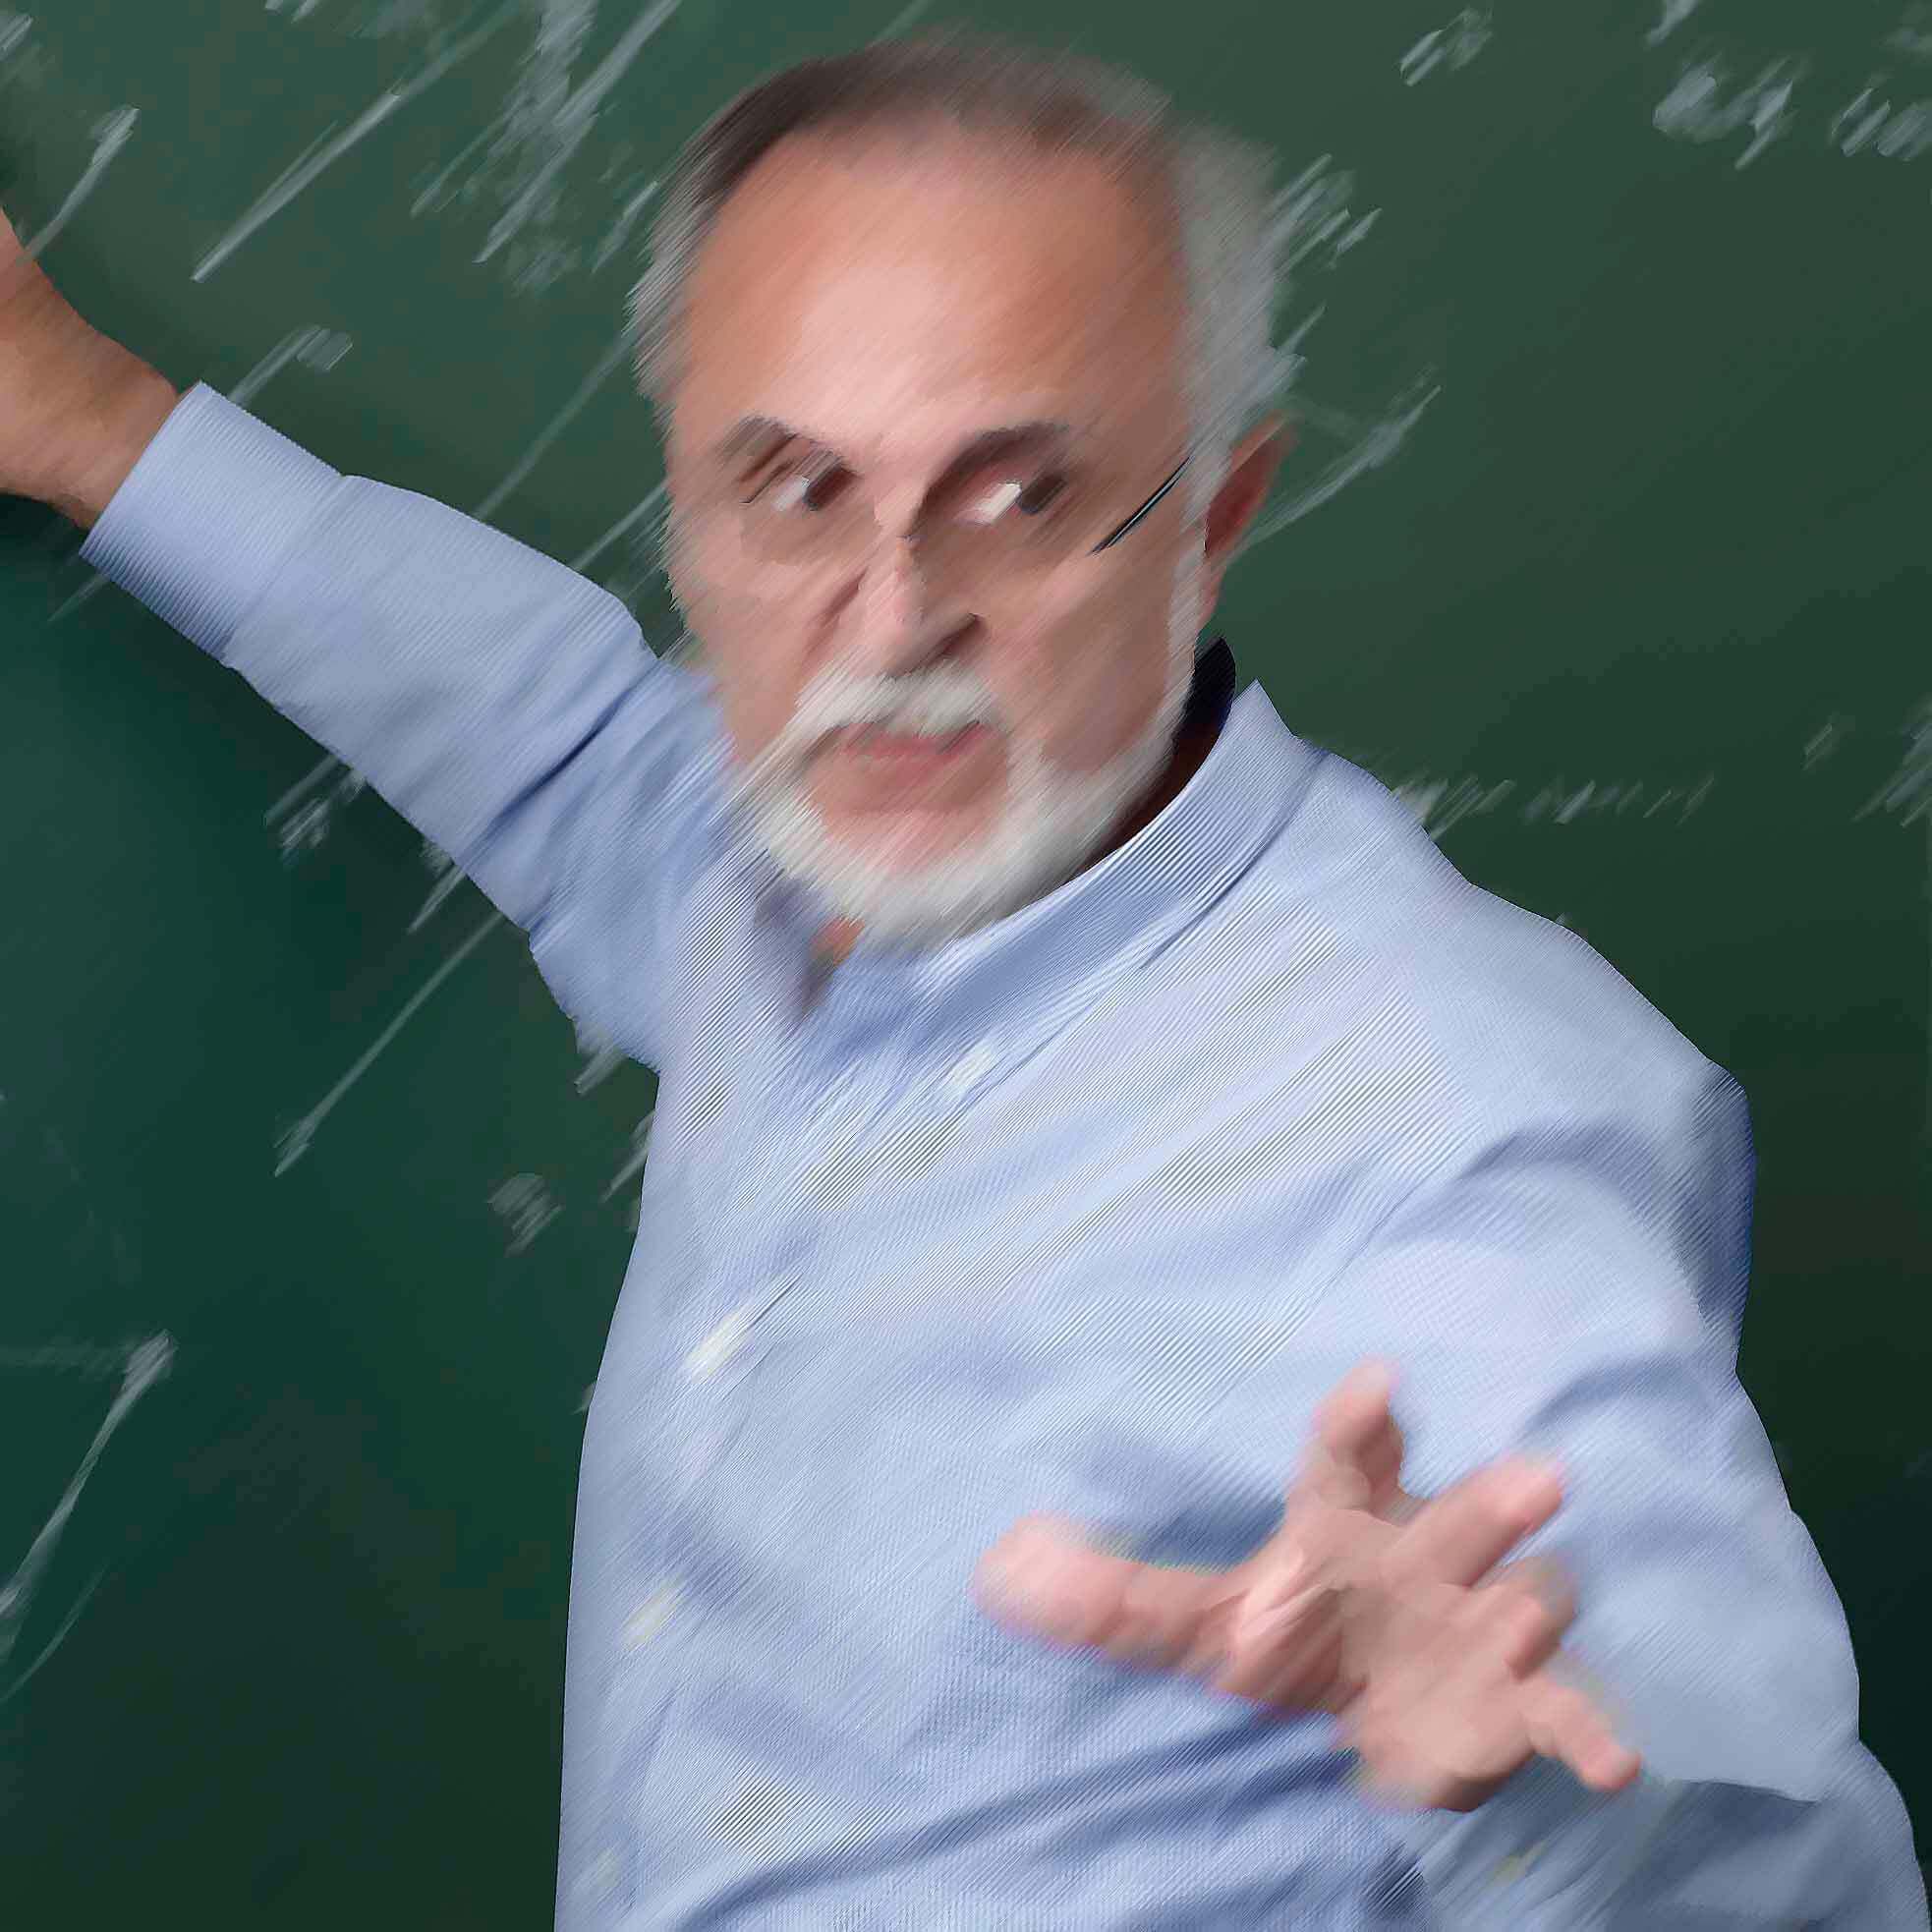 Professor giving class at the blackboard